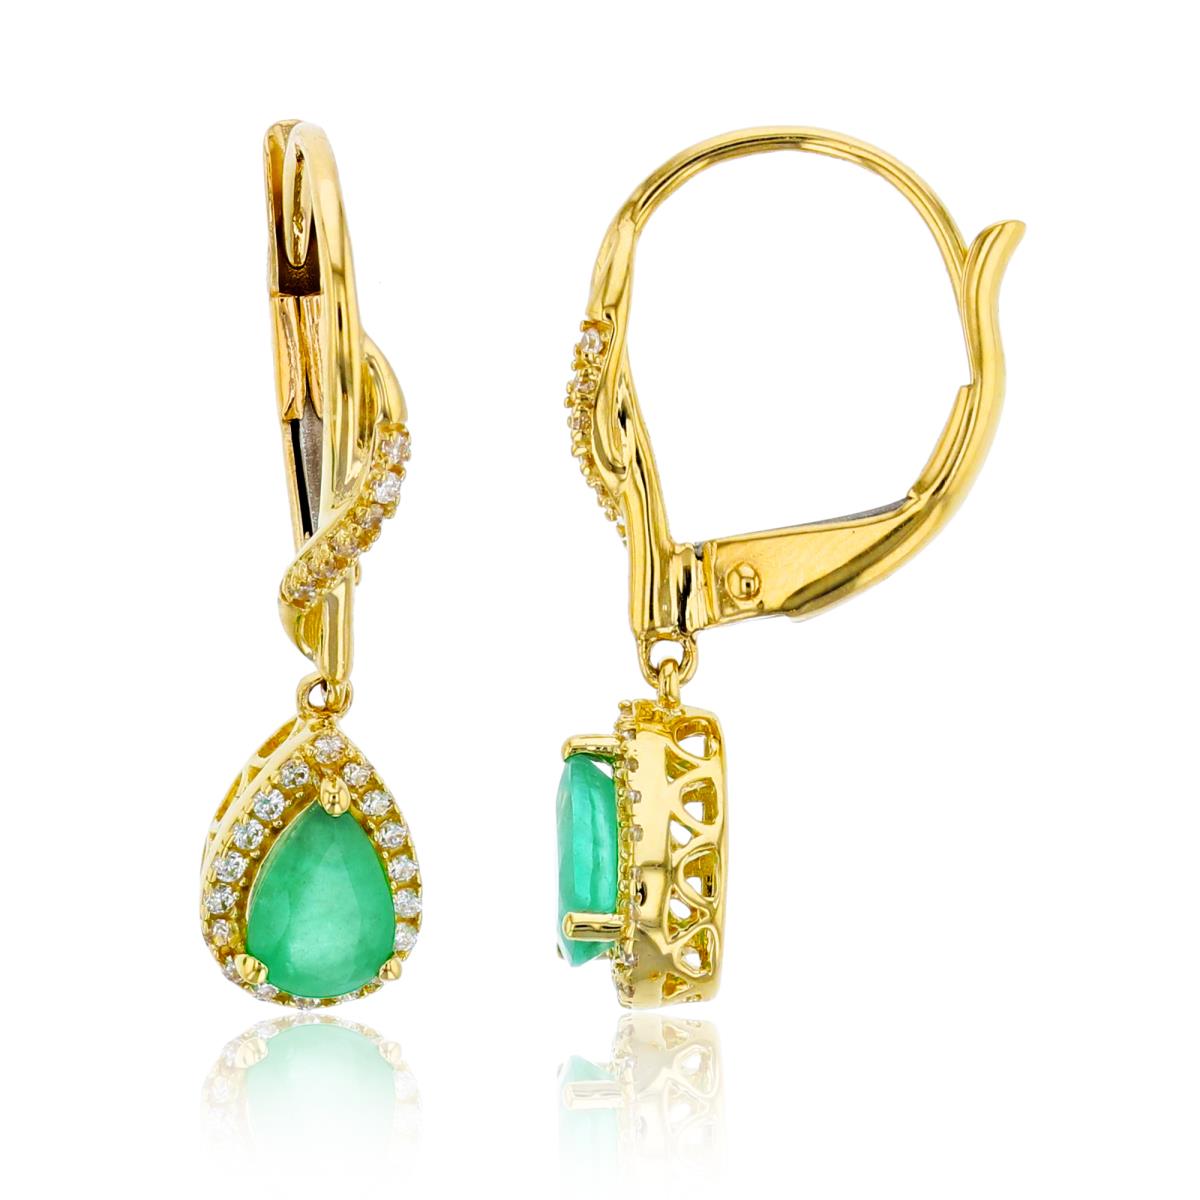 10K Yellow Gold 0.17cttw Rnd Diamonds & 6x4mm PS Emerald Halo Dangling Pear-shape Earrings